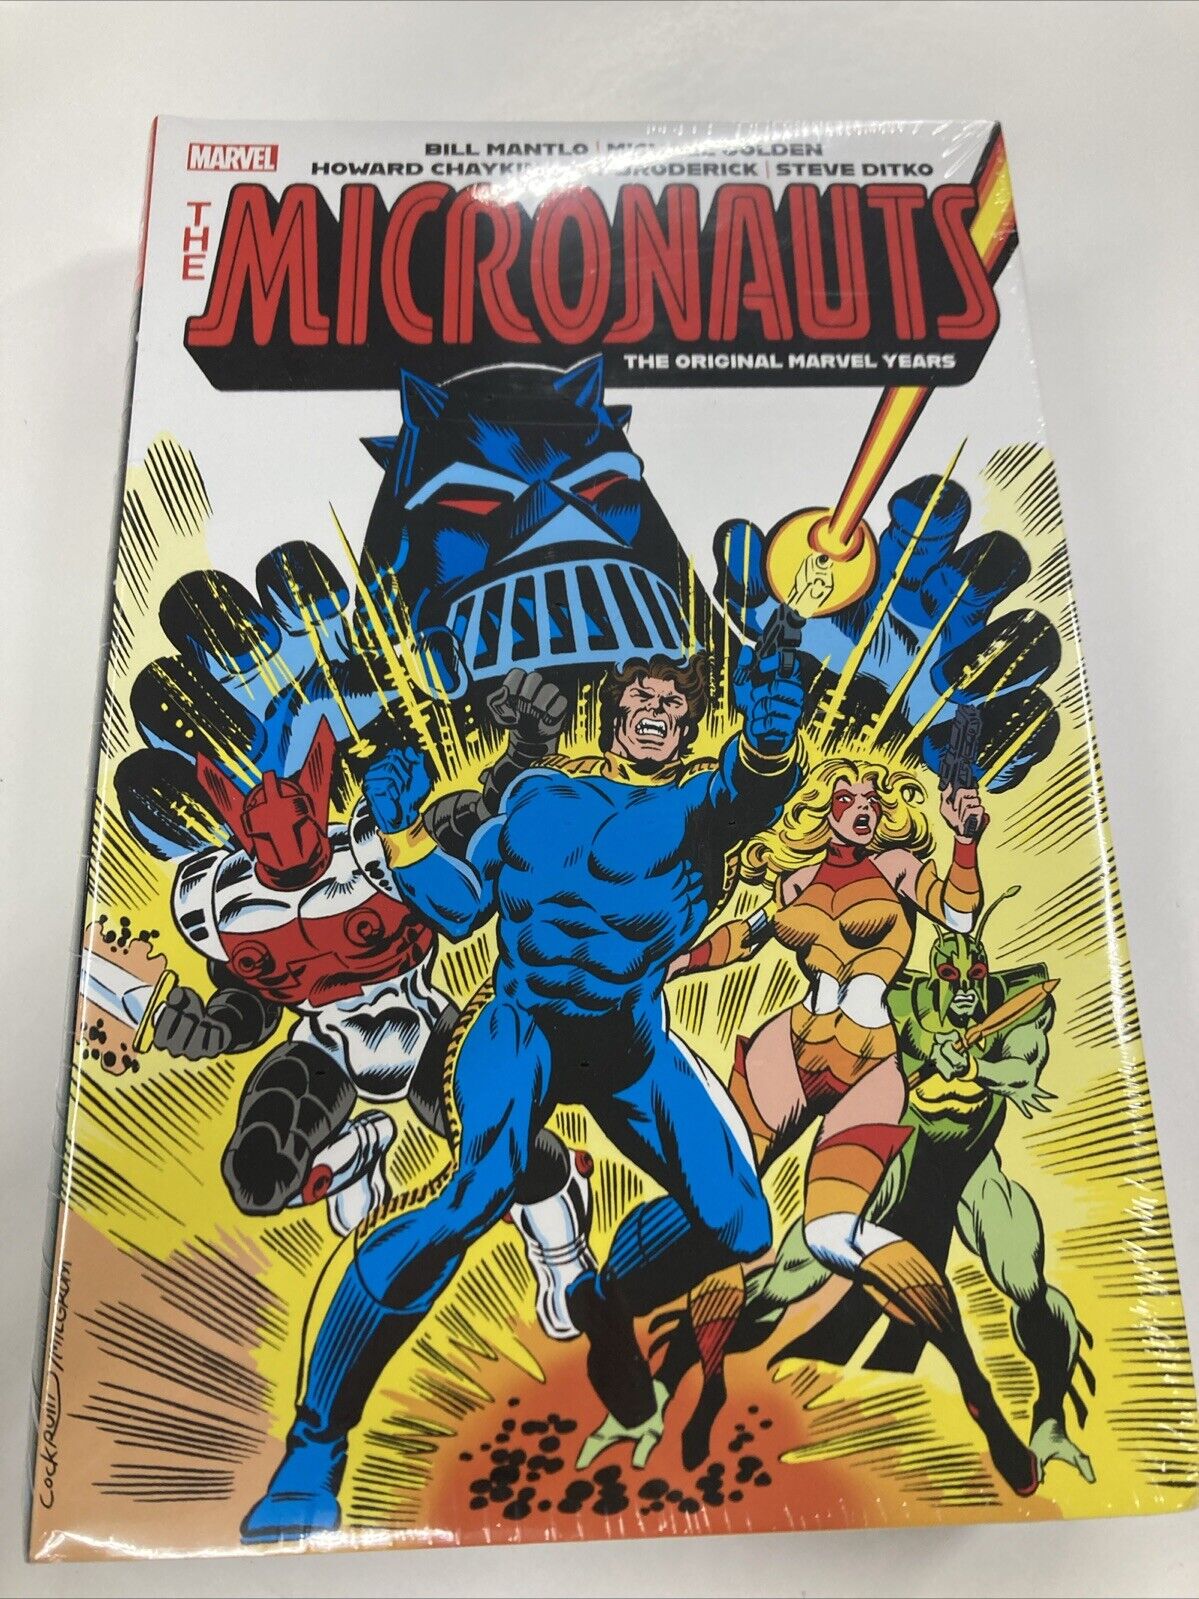 DAMAGED Micronauts Original Marvel Years Omnibus Vol 1 GOLDEN DM COVER HC